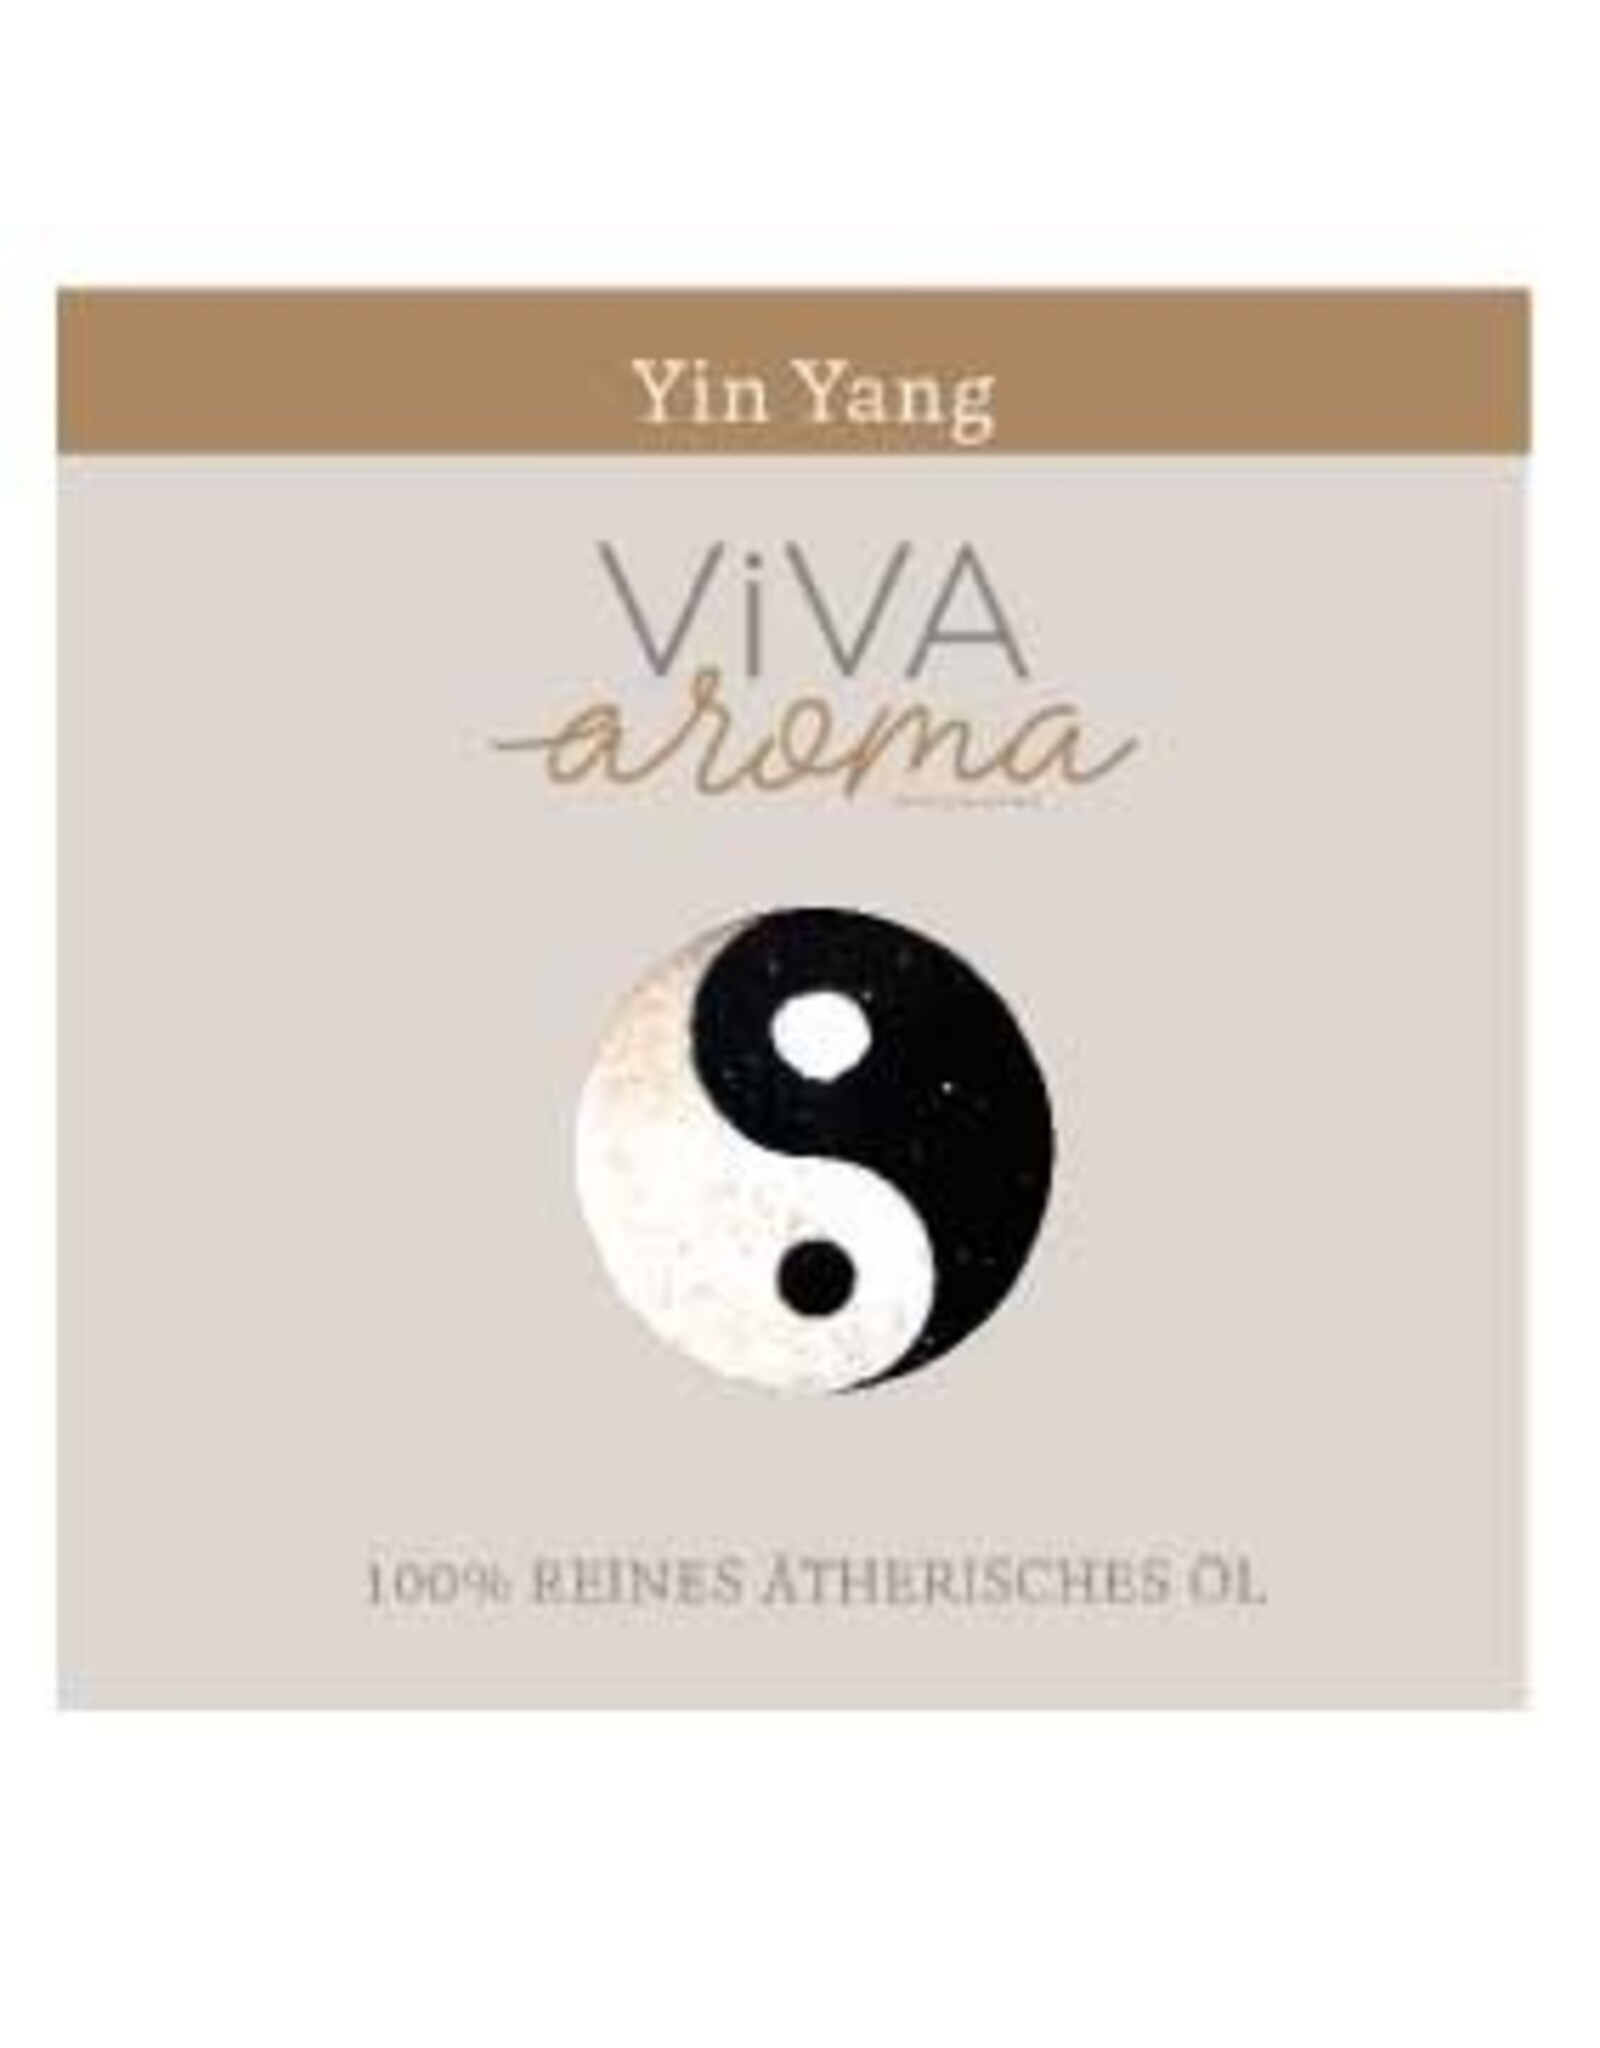 INVITALIS Vivaaroma Oil Yin Yang 20ml